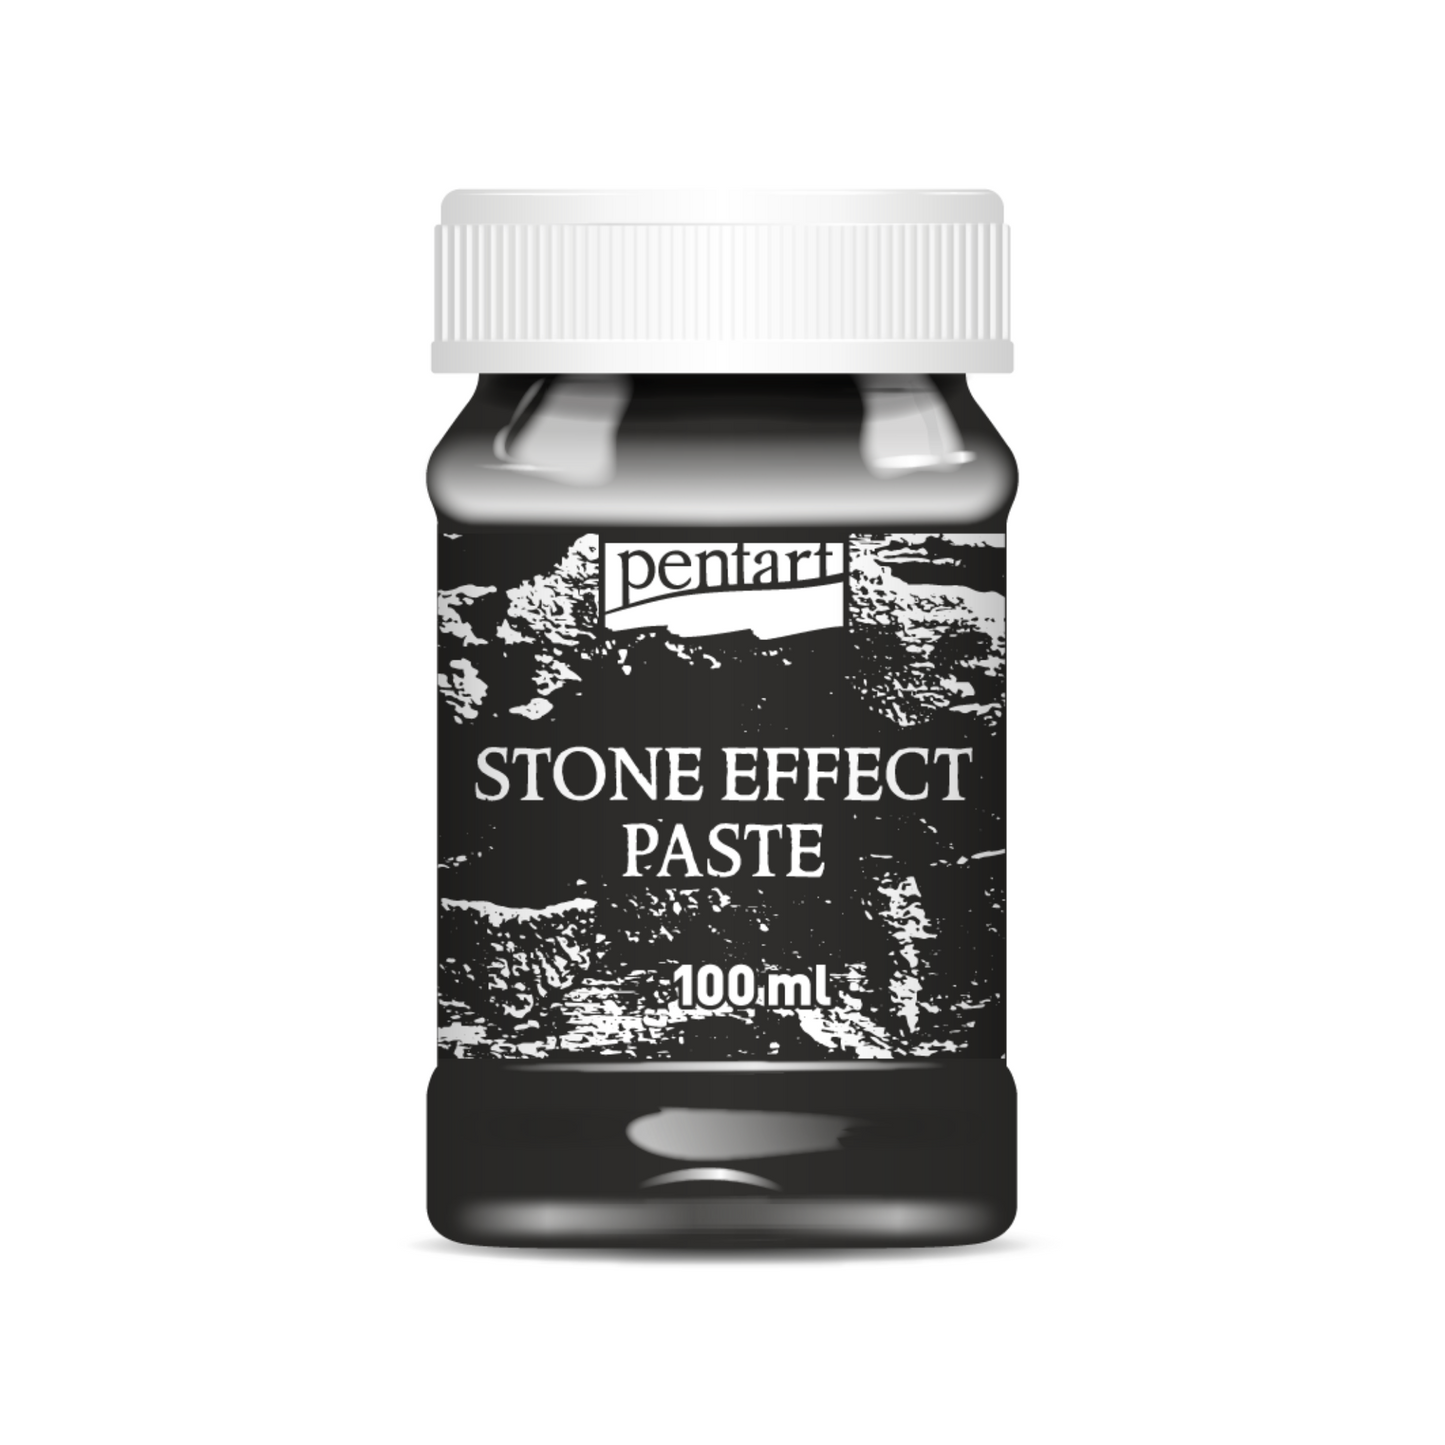 Stone Effect Paste